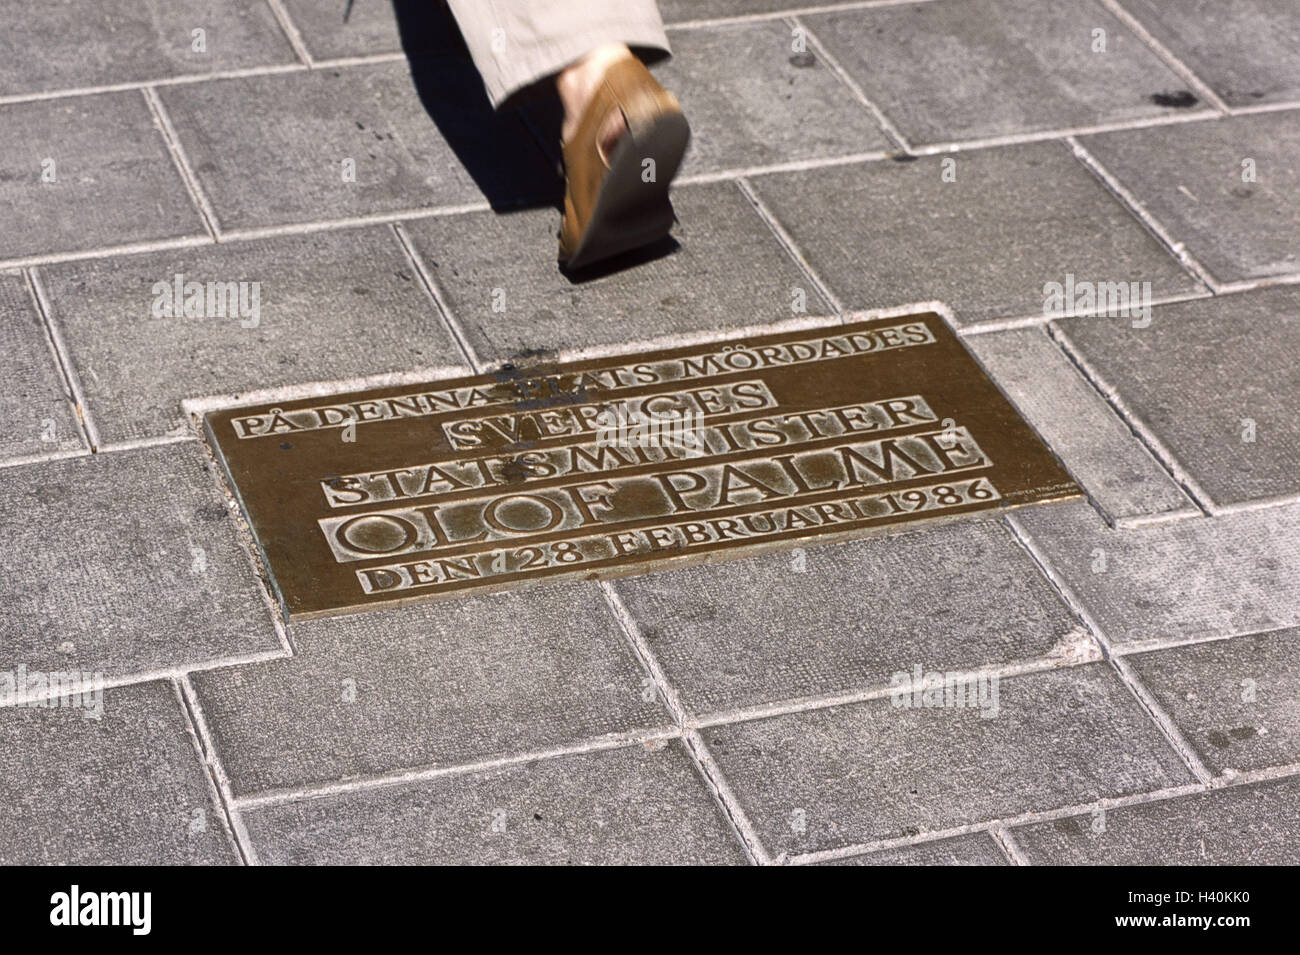 Sweden, Stockholm, Olof Palme, sidewalk, commemorative table, north euro grandpa, Scandinavia, politician, murder, memory, recollection, site crime, attempt, pedestrian, detail, bone Stock Photo